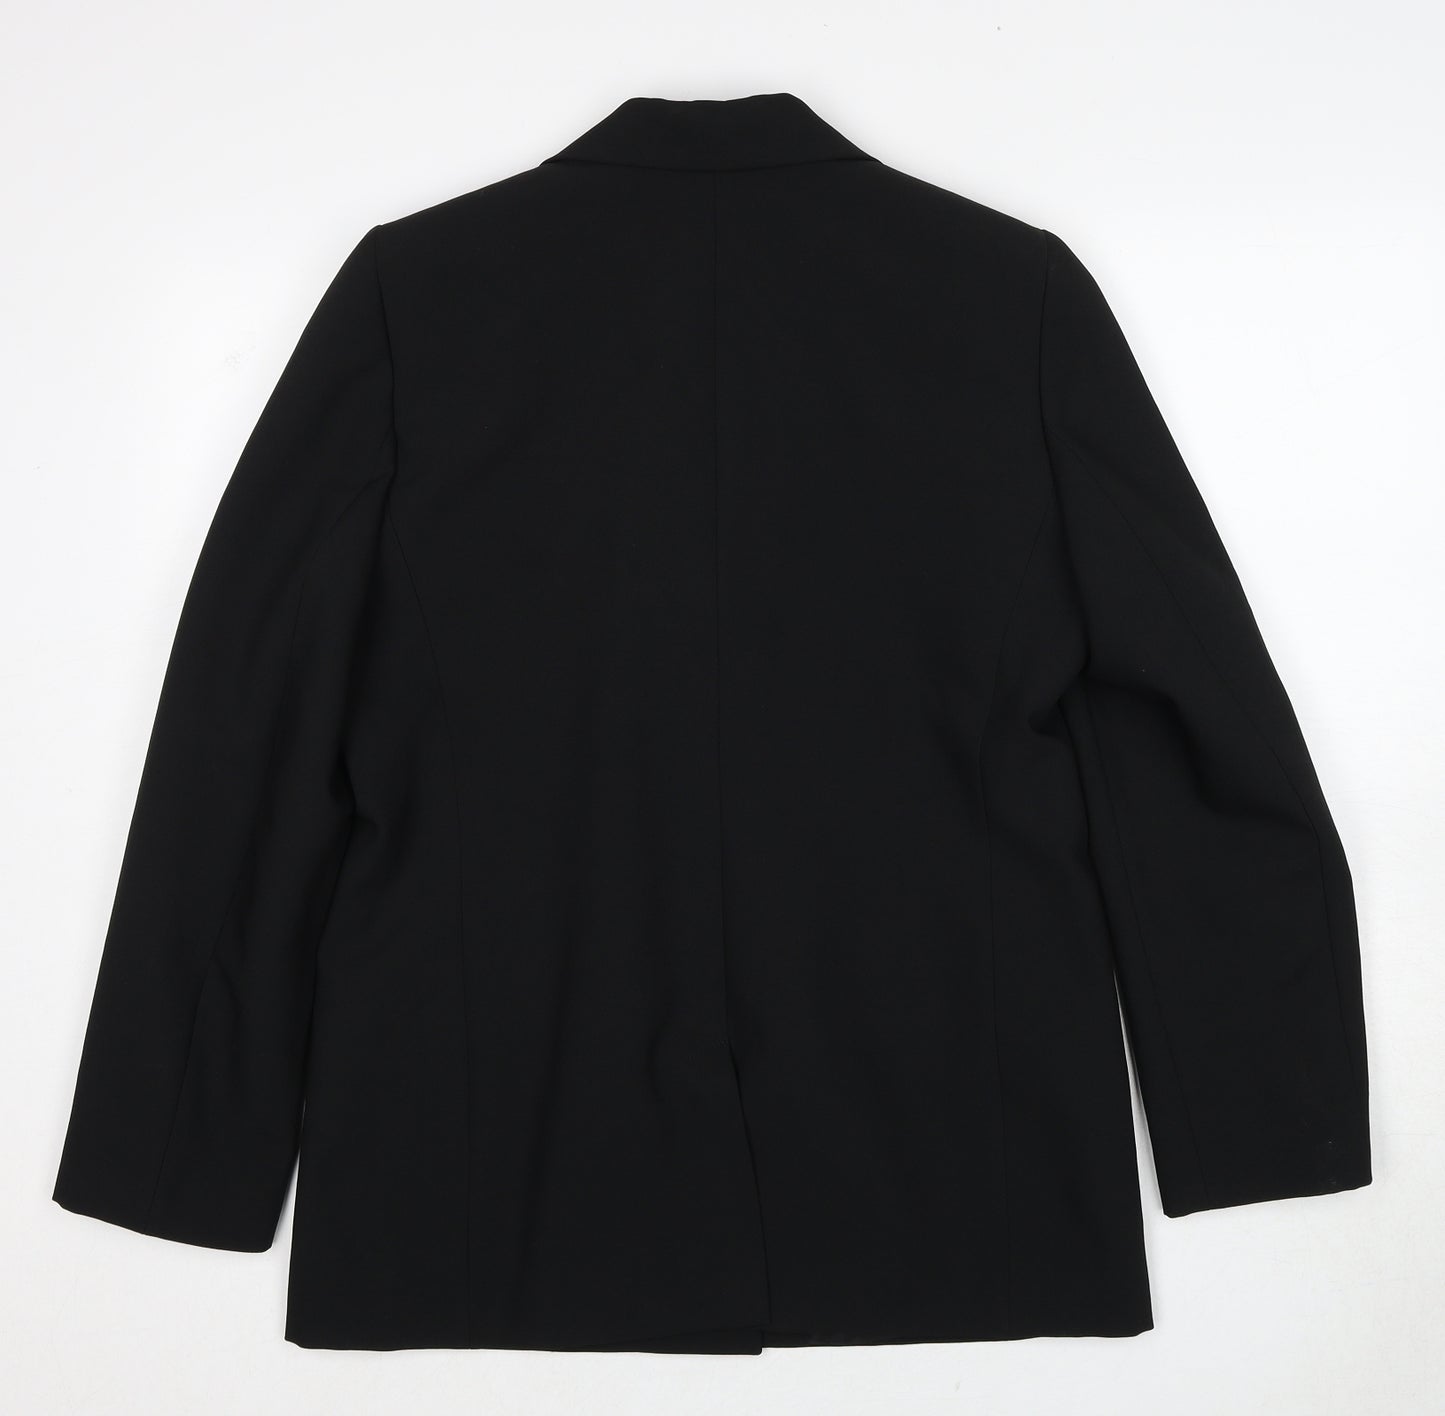 Best Womens Black Polyester Jacket Suit Jacket Size 14